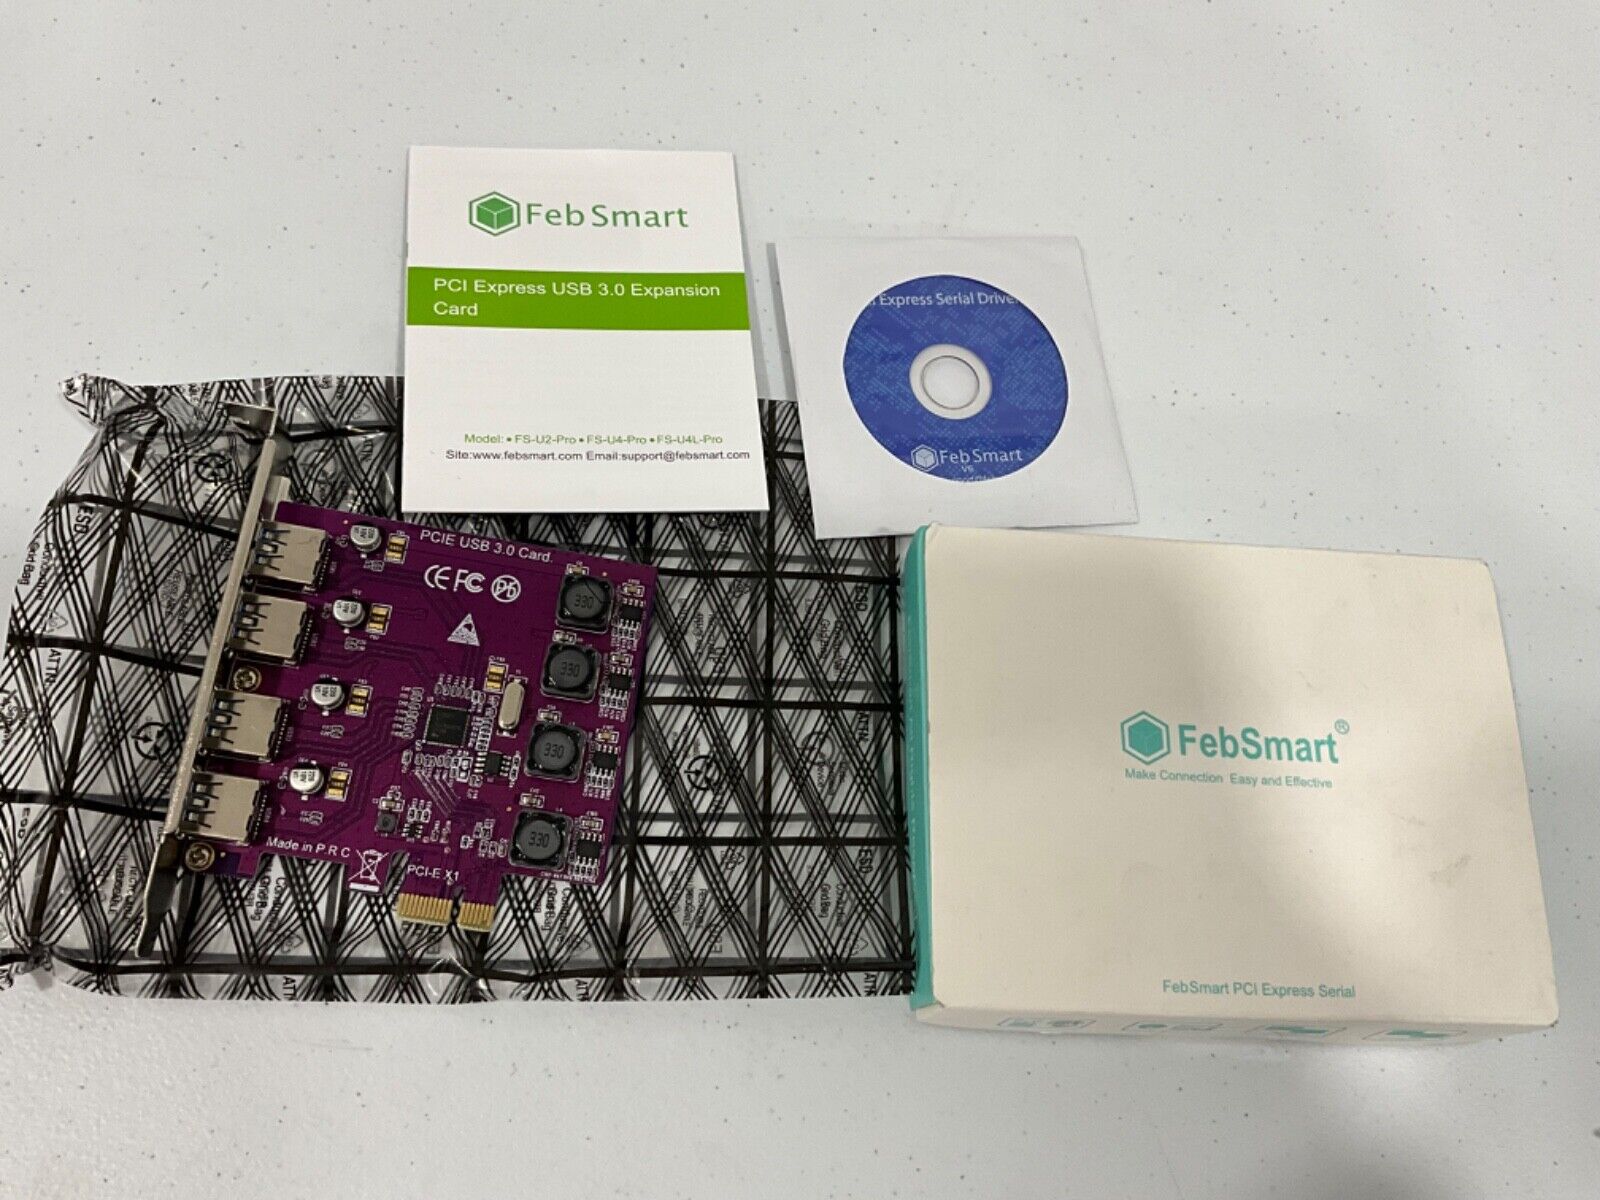 FebSmart PCI Express Serial FS-U4-Pro Purple Open Box